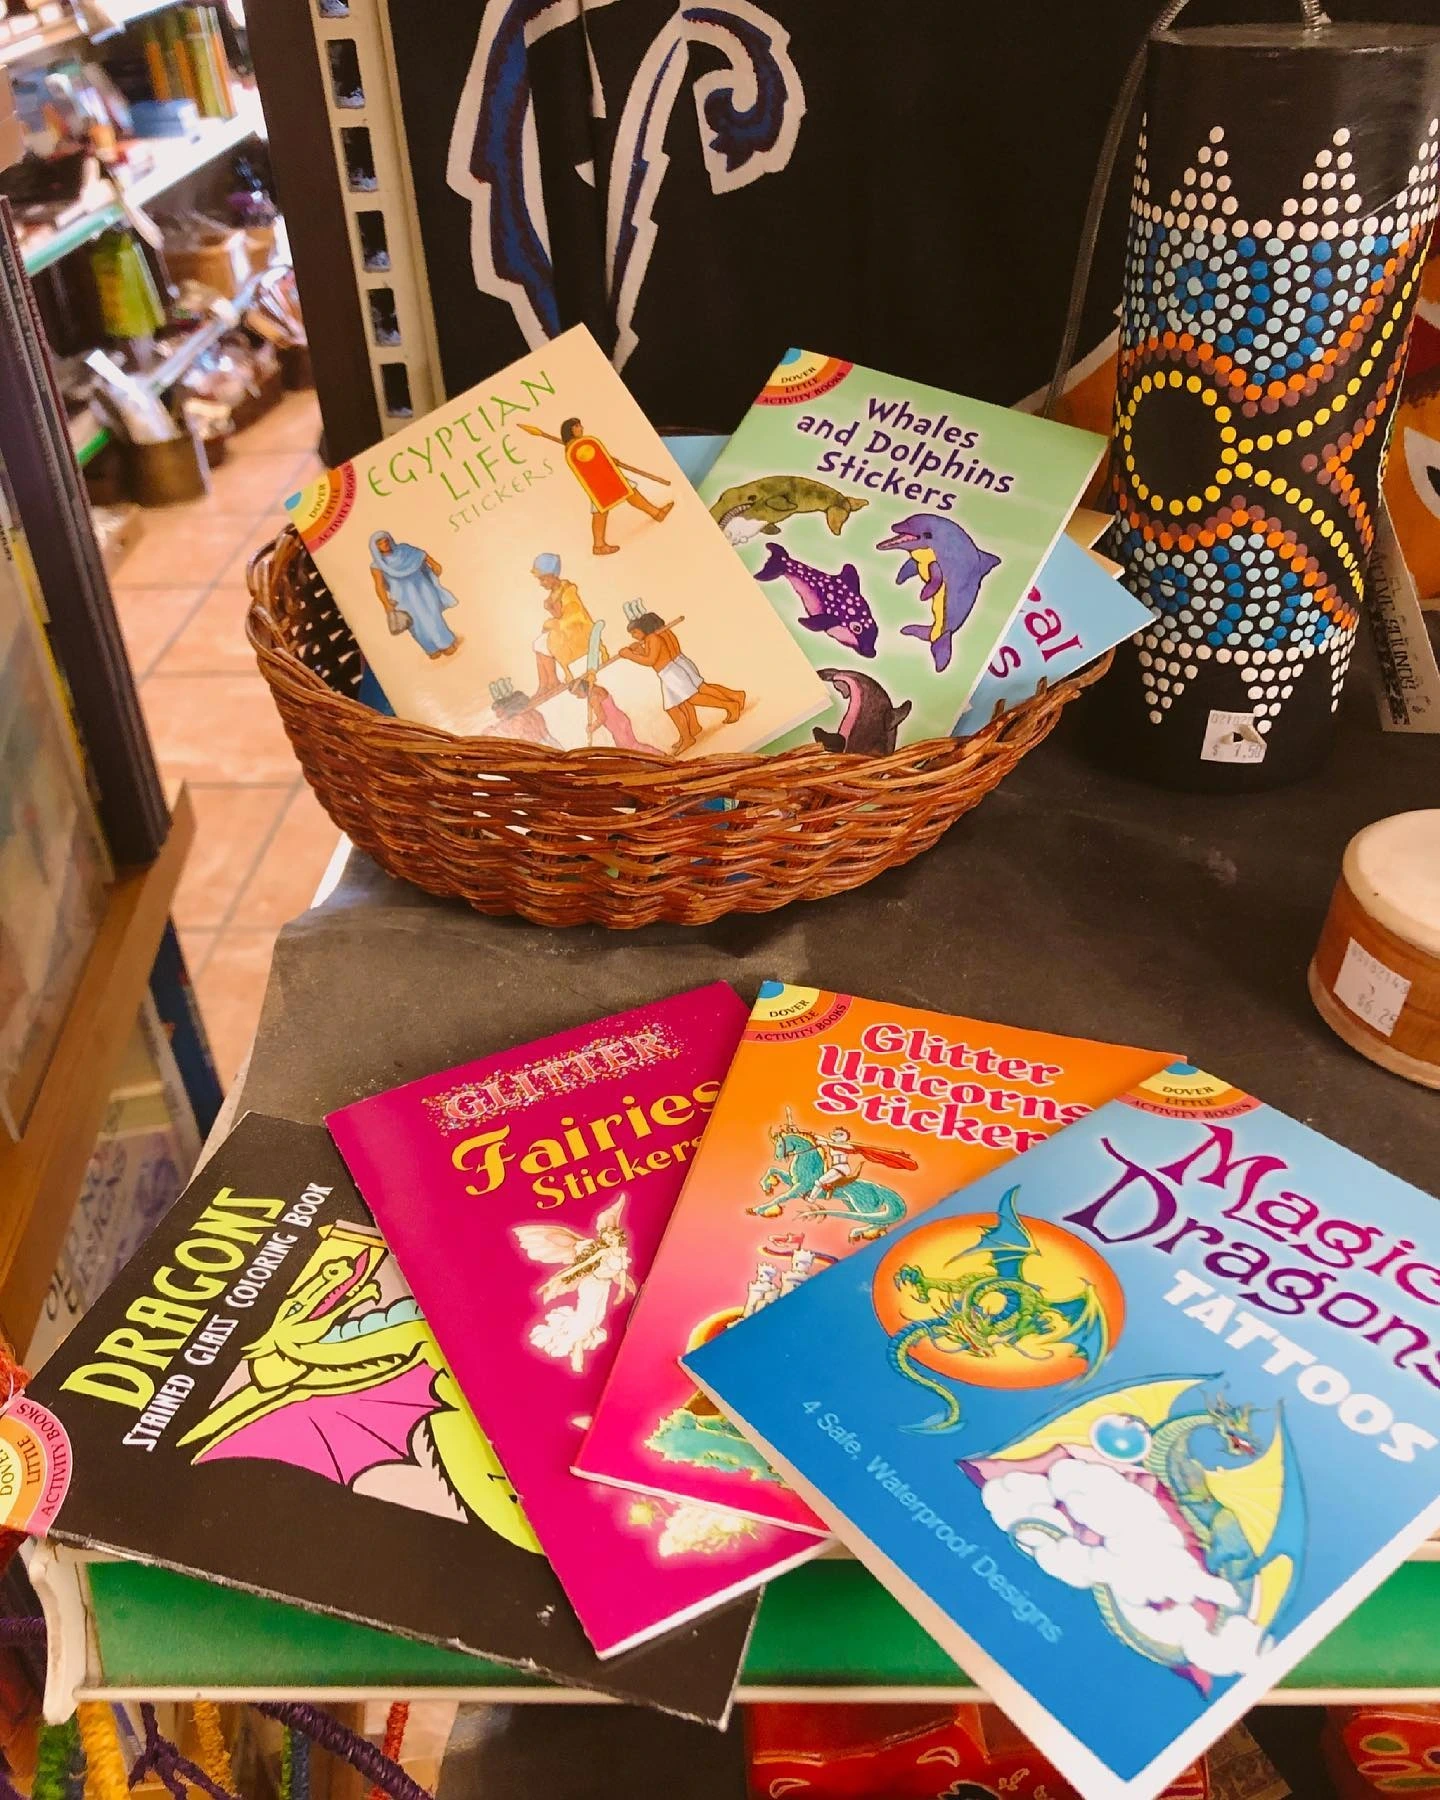 A display of children's sticker books